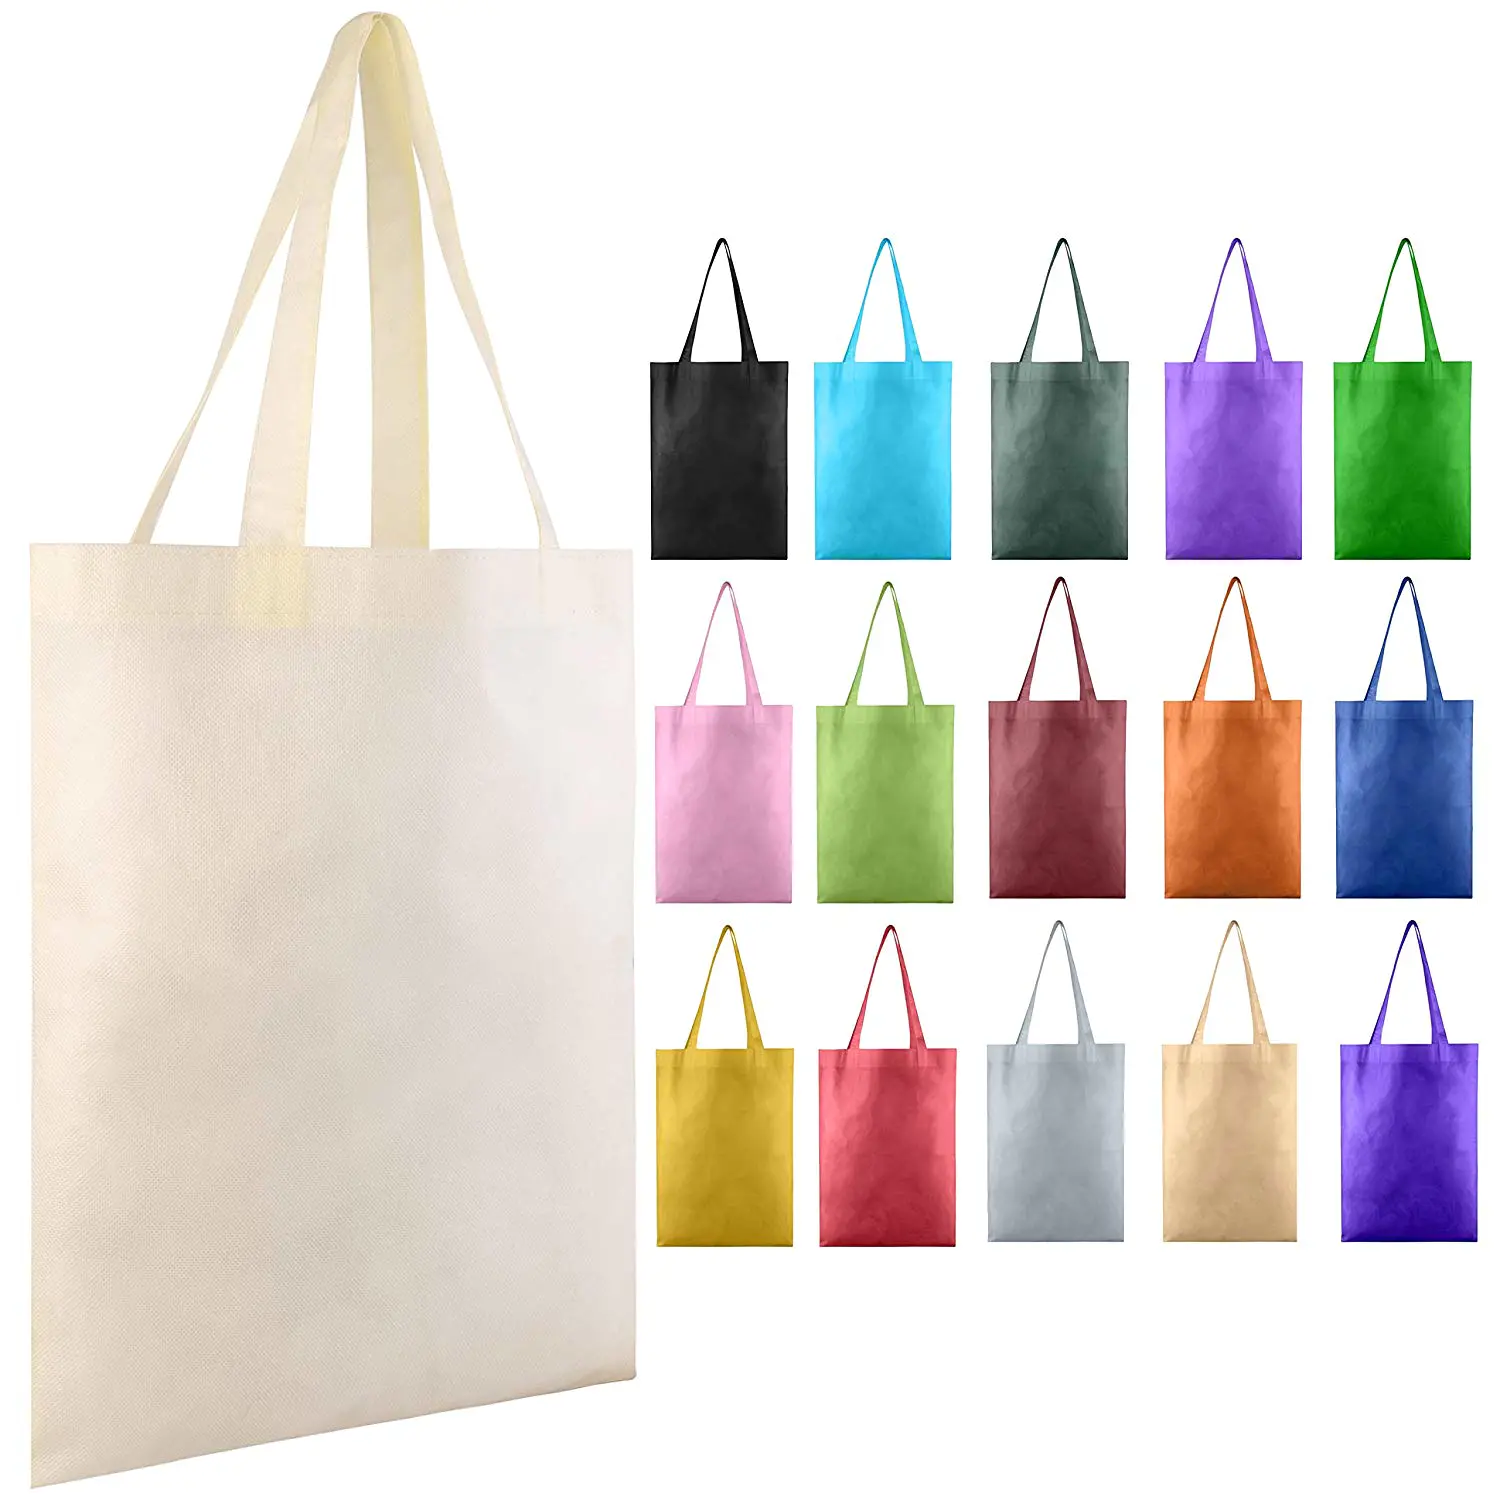 Eco-friendly reusable spunbond plain wholesale non woven fabric shopping bag